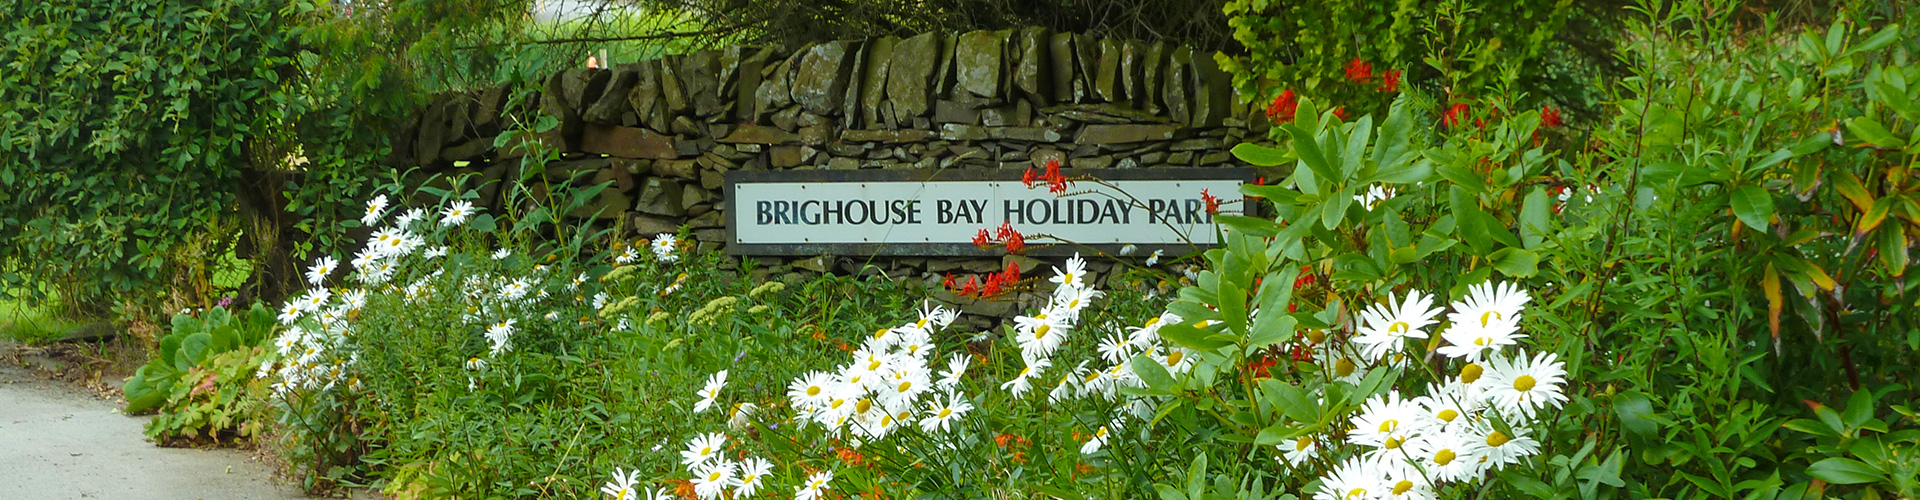 Brighouse Bay Holiday Park